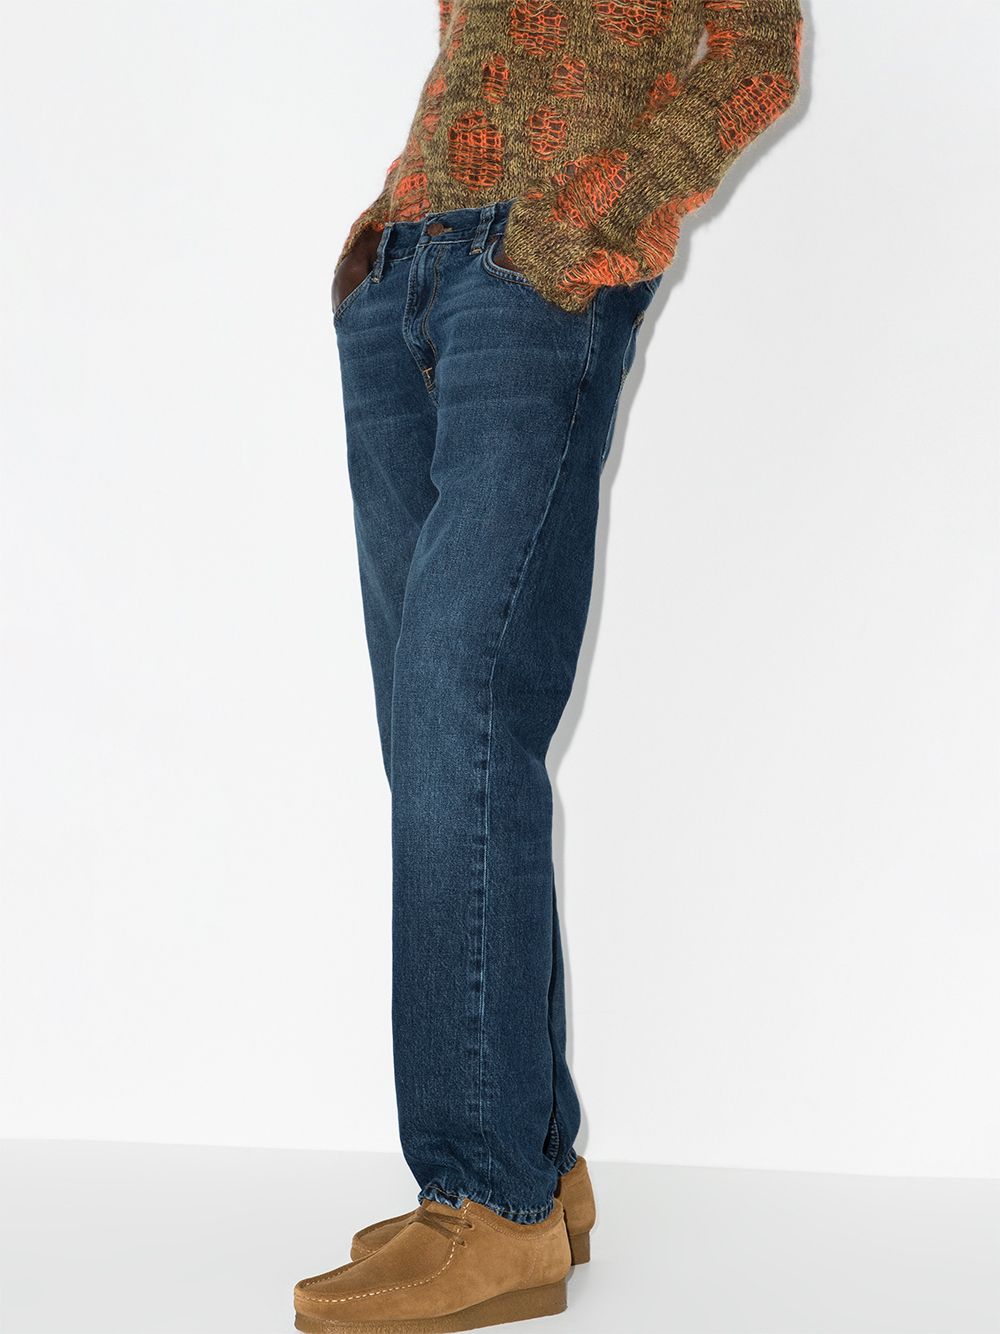 фото Nudie jeans джинсы gritty jackson прямого кроя